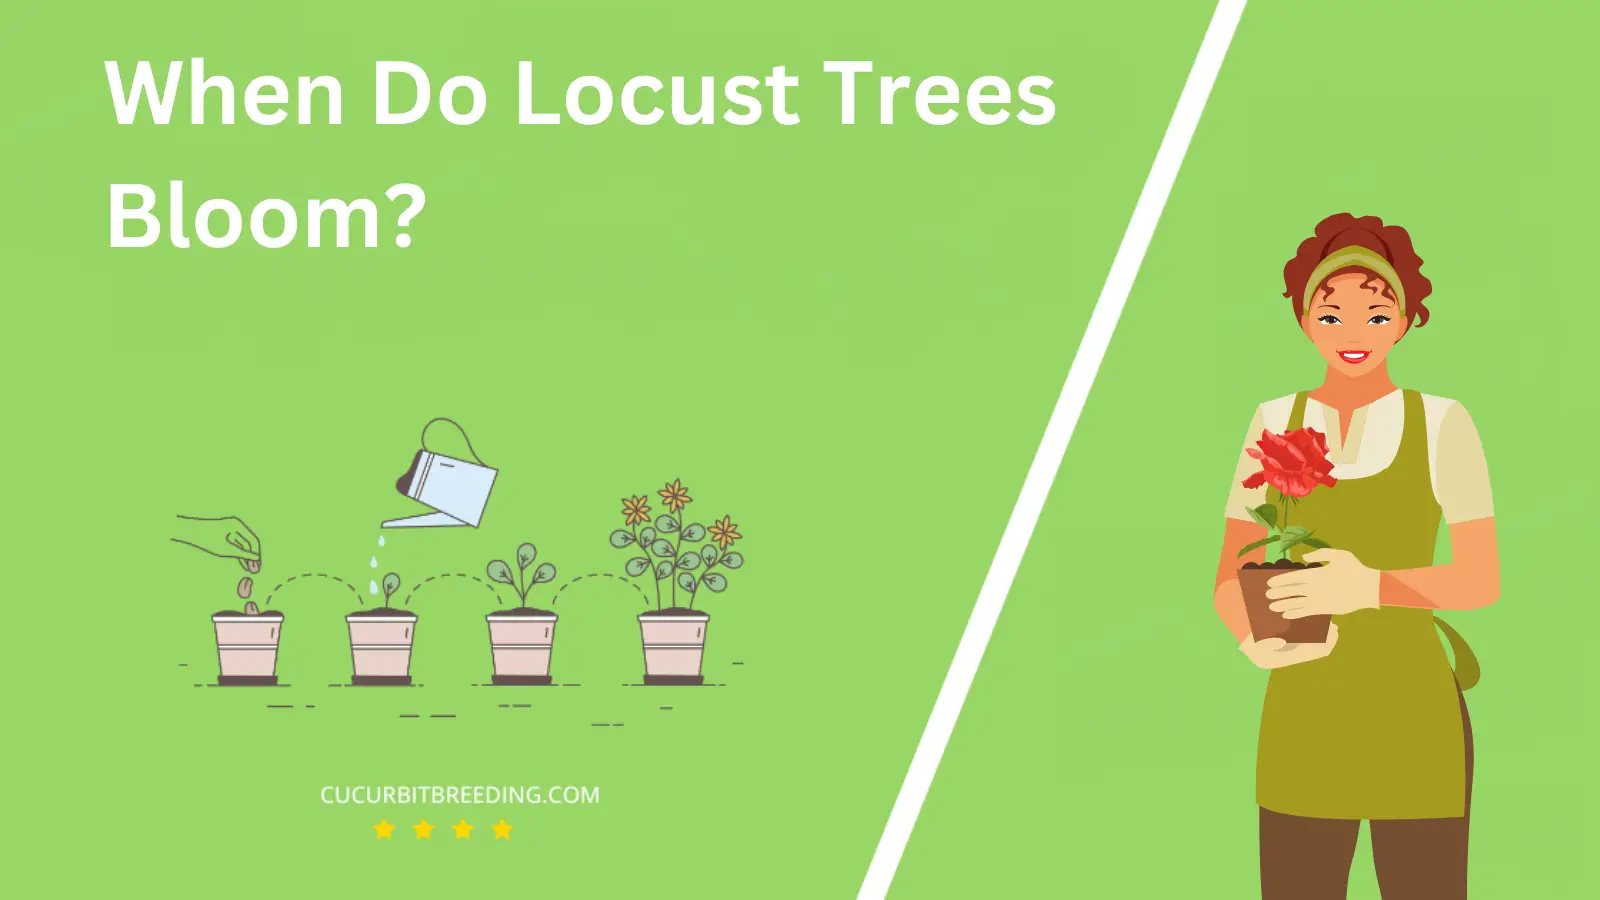 When Do Locust Trees Bloom?